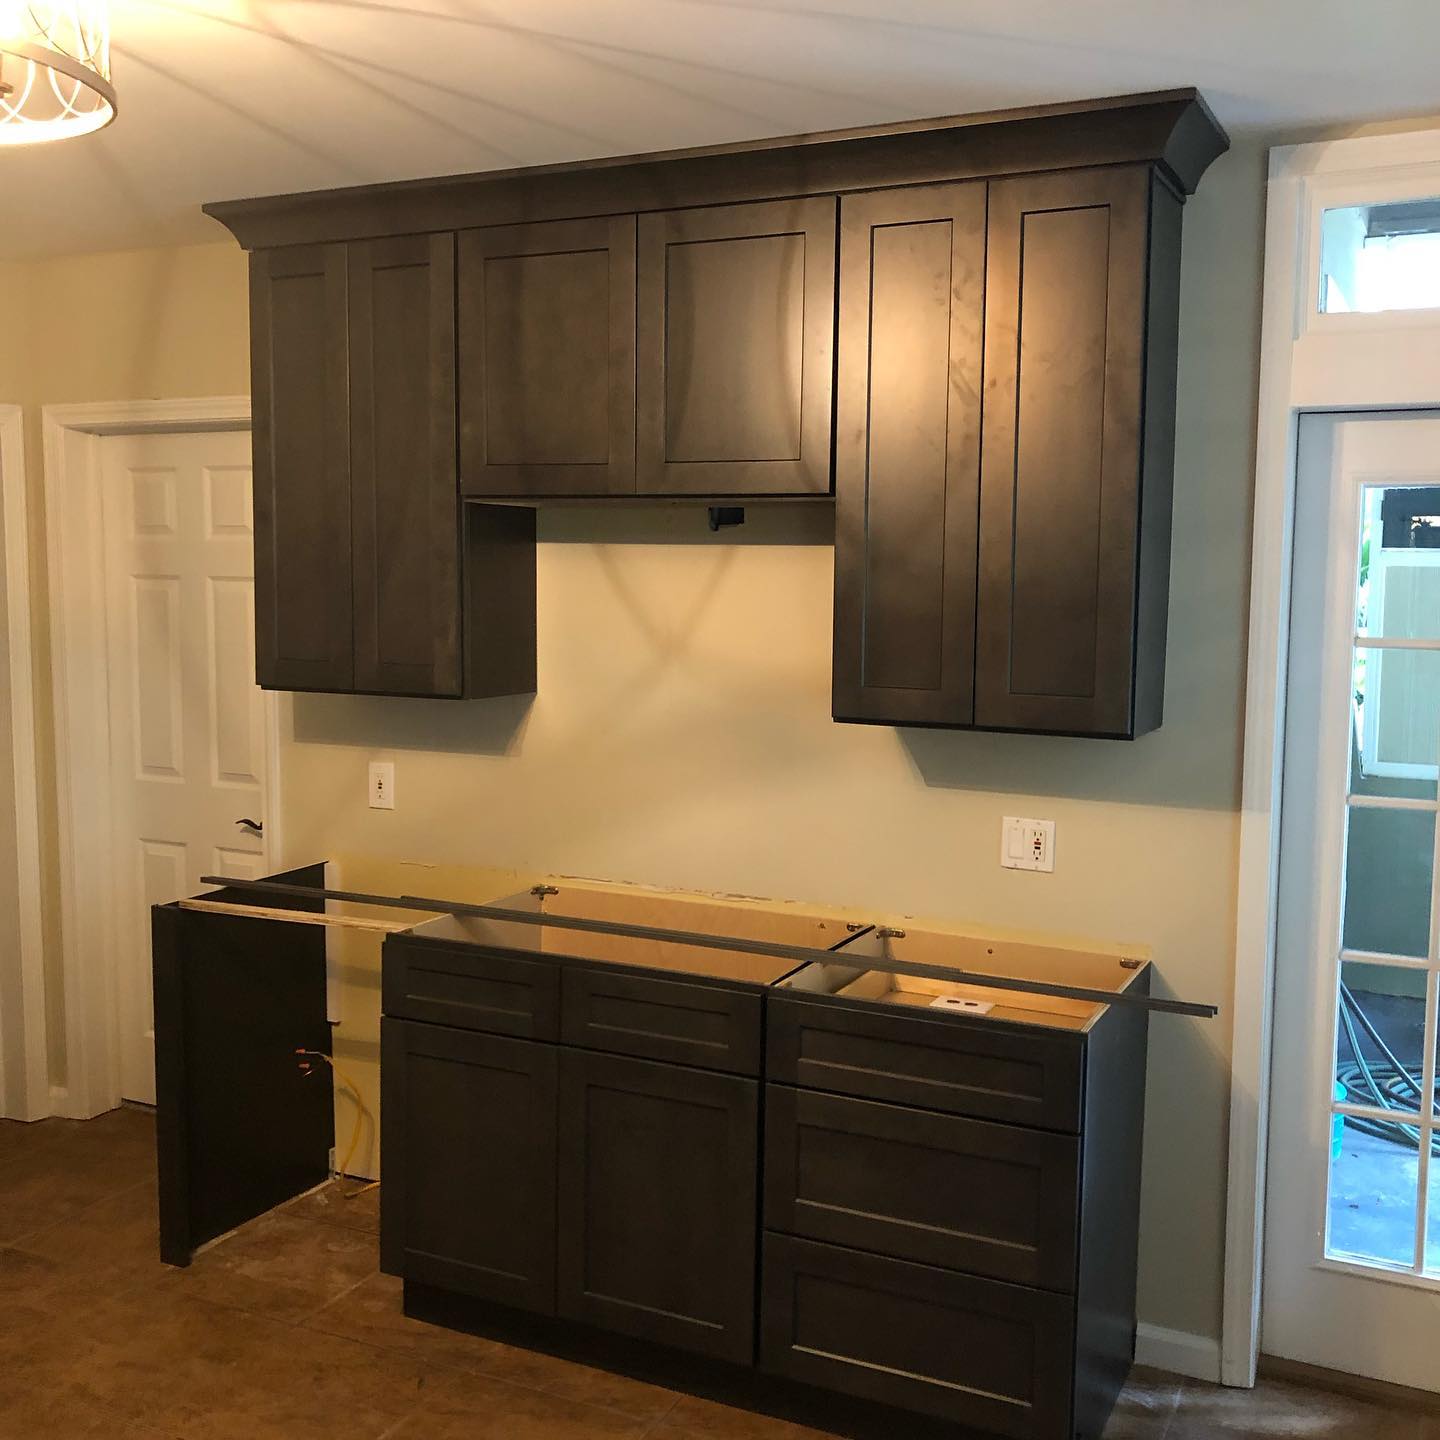 Basement Kitchen Cabinets Installed 5